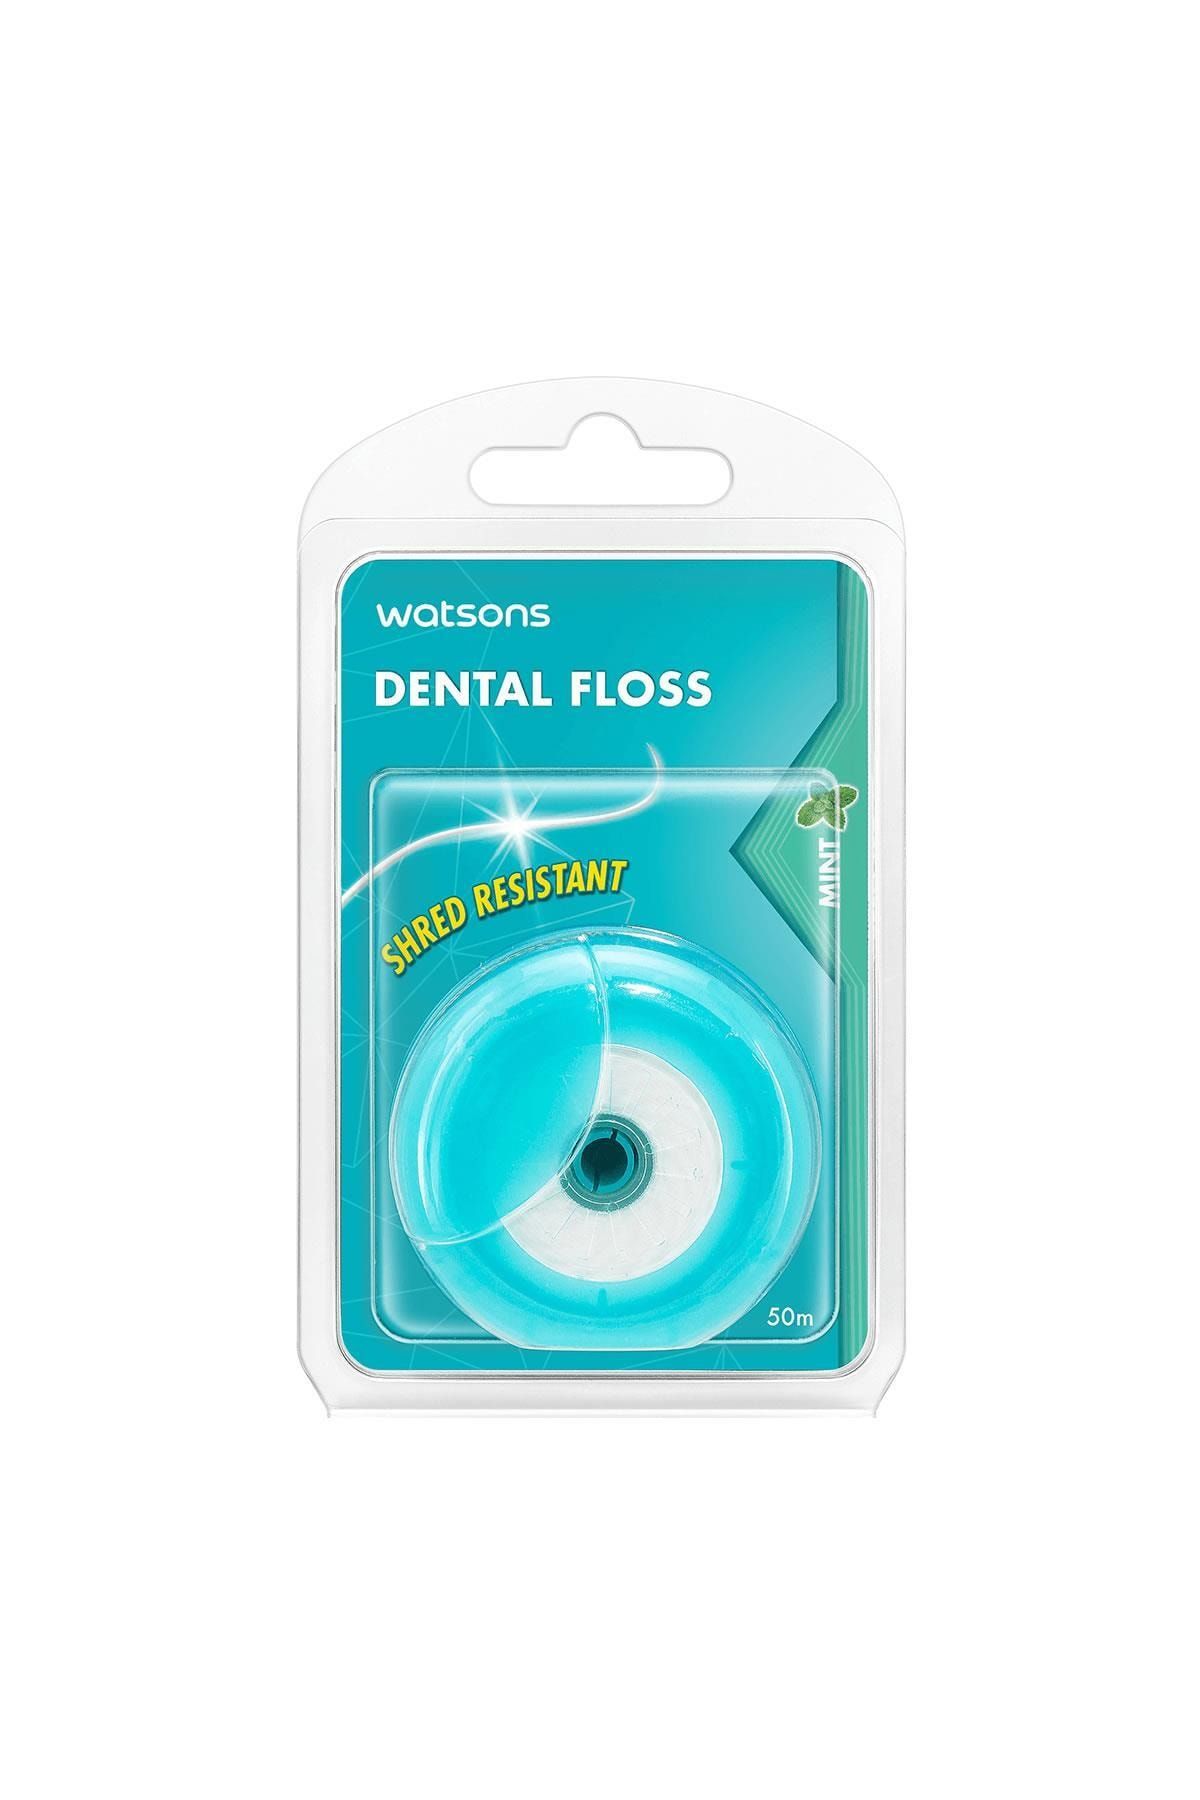 Watsons Mint Dental Floss 50m 4894532390588